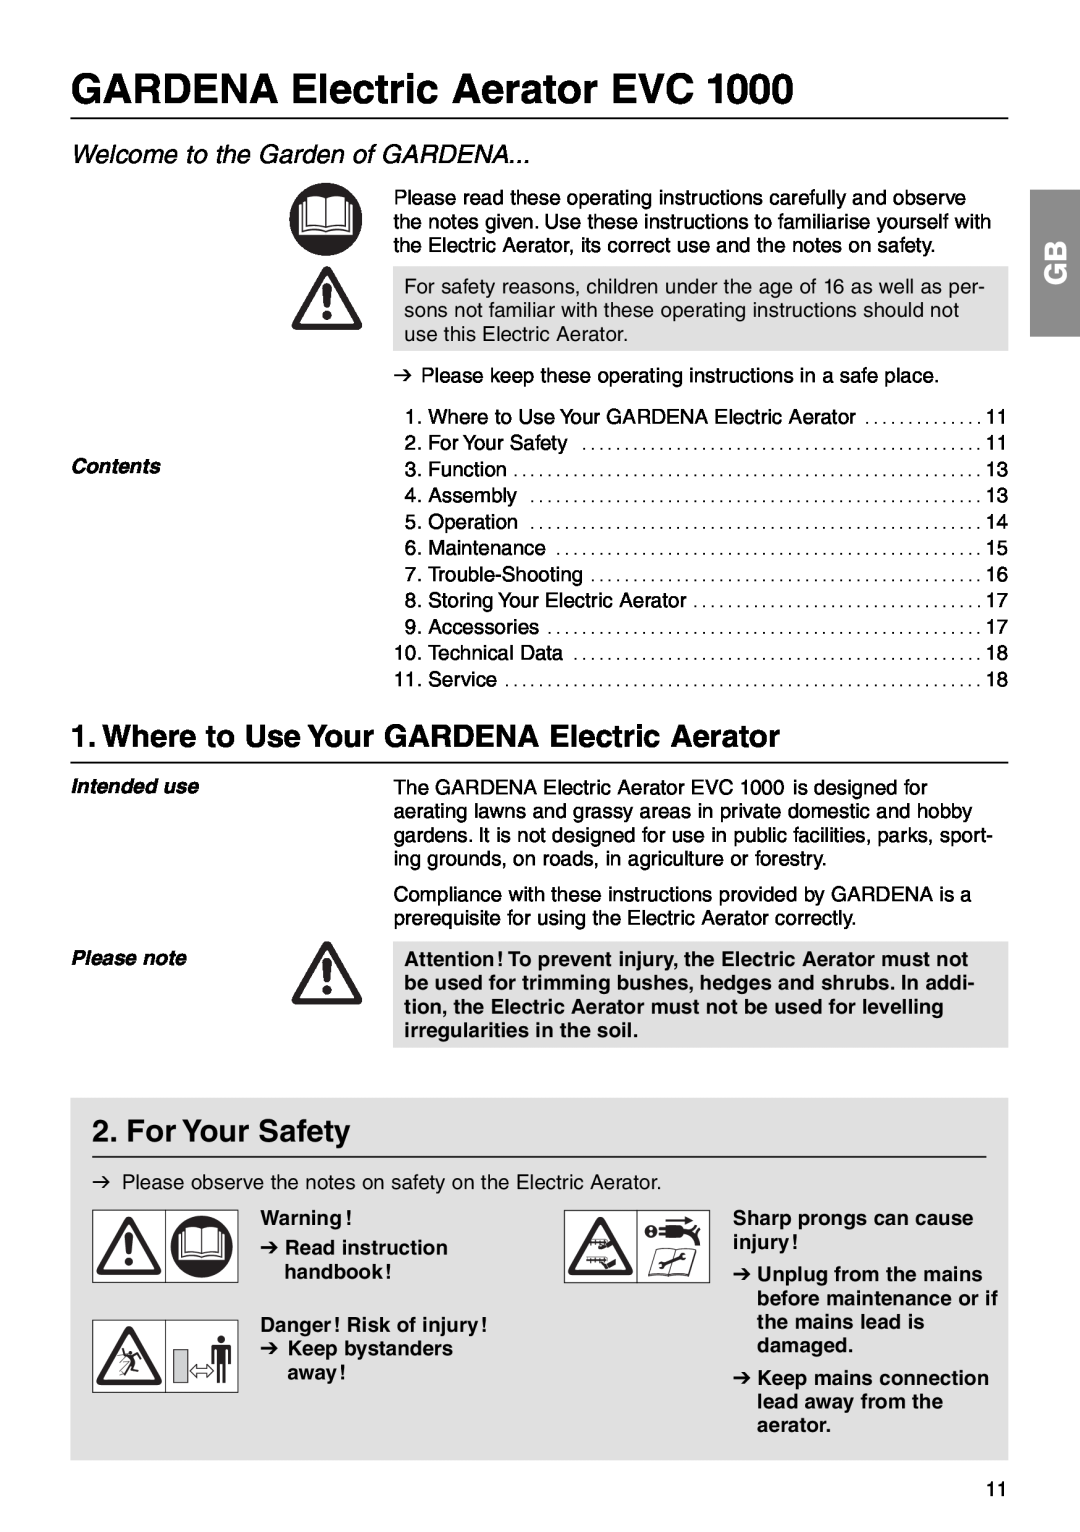 Gardena EVC1000 Where to Use Your GARDENA Electric Aerator, For Your Safety, GARDENA Electric Aerator EVC 